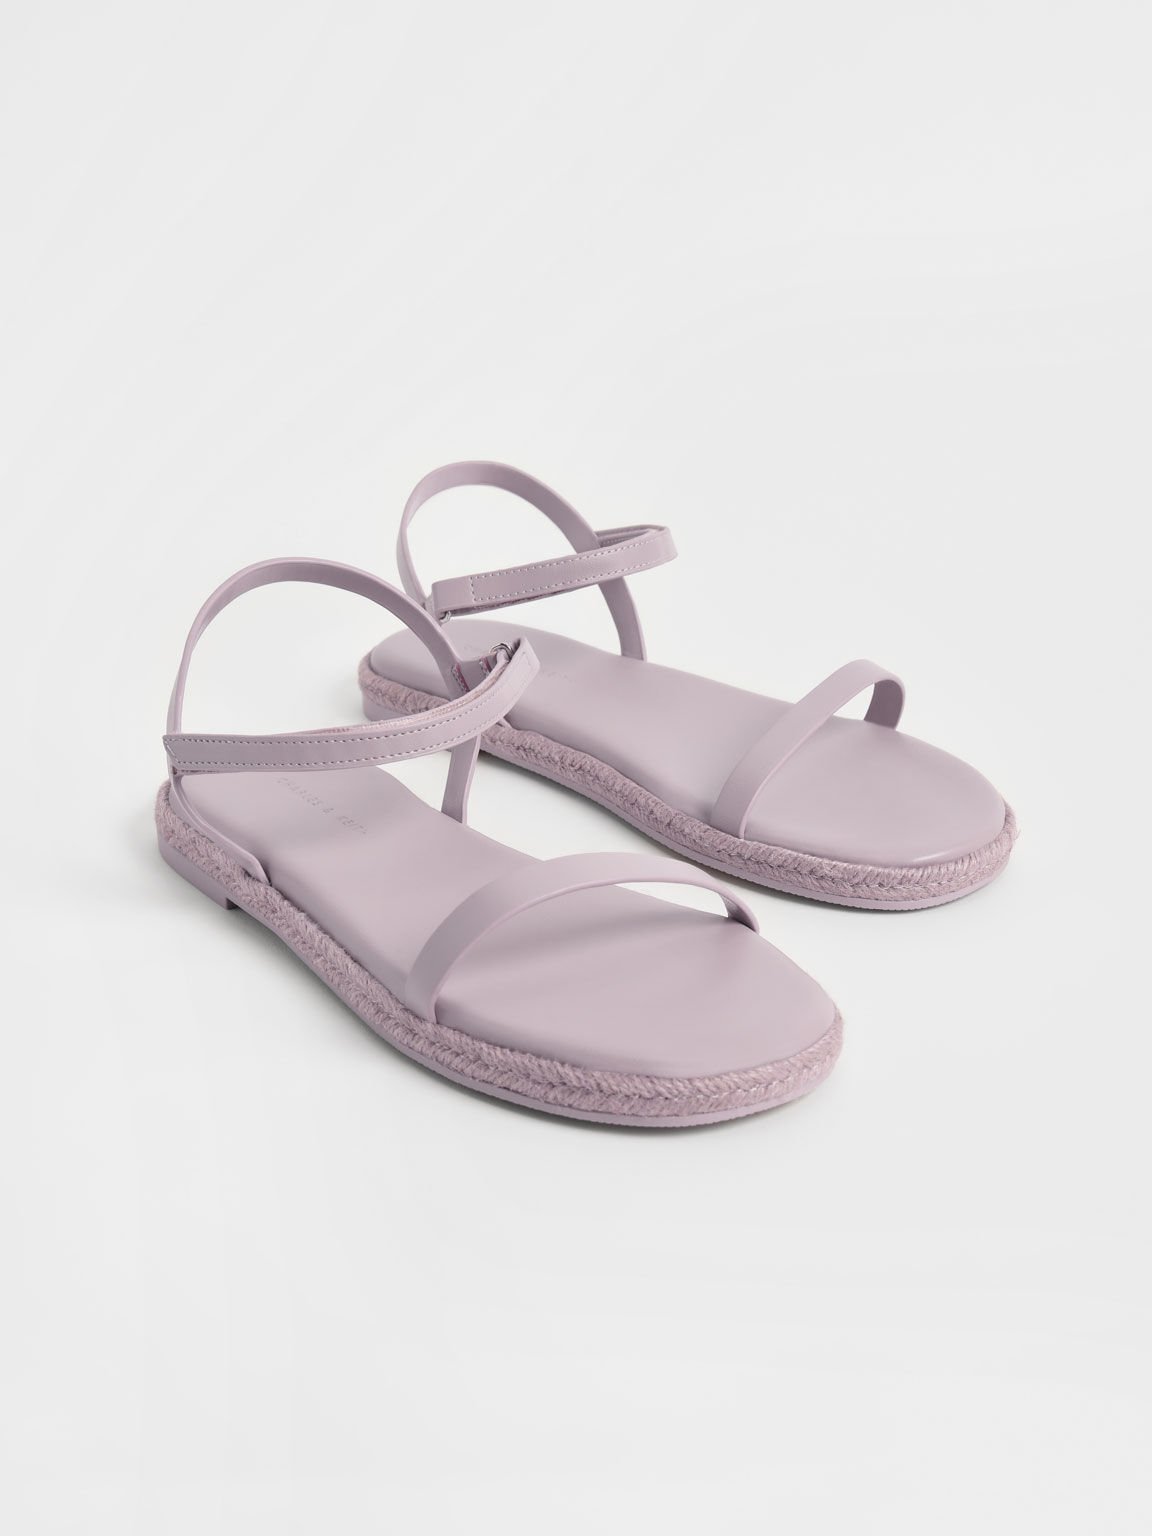 Ankle-Strap Flat Espadrille Sandals, Lilac, hi-res